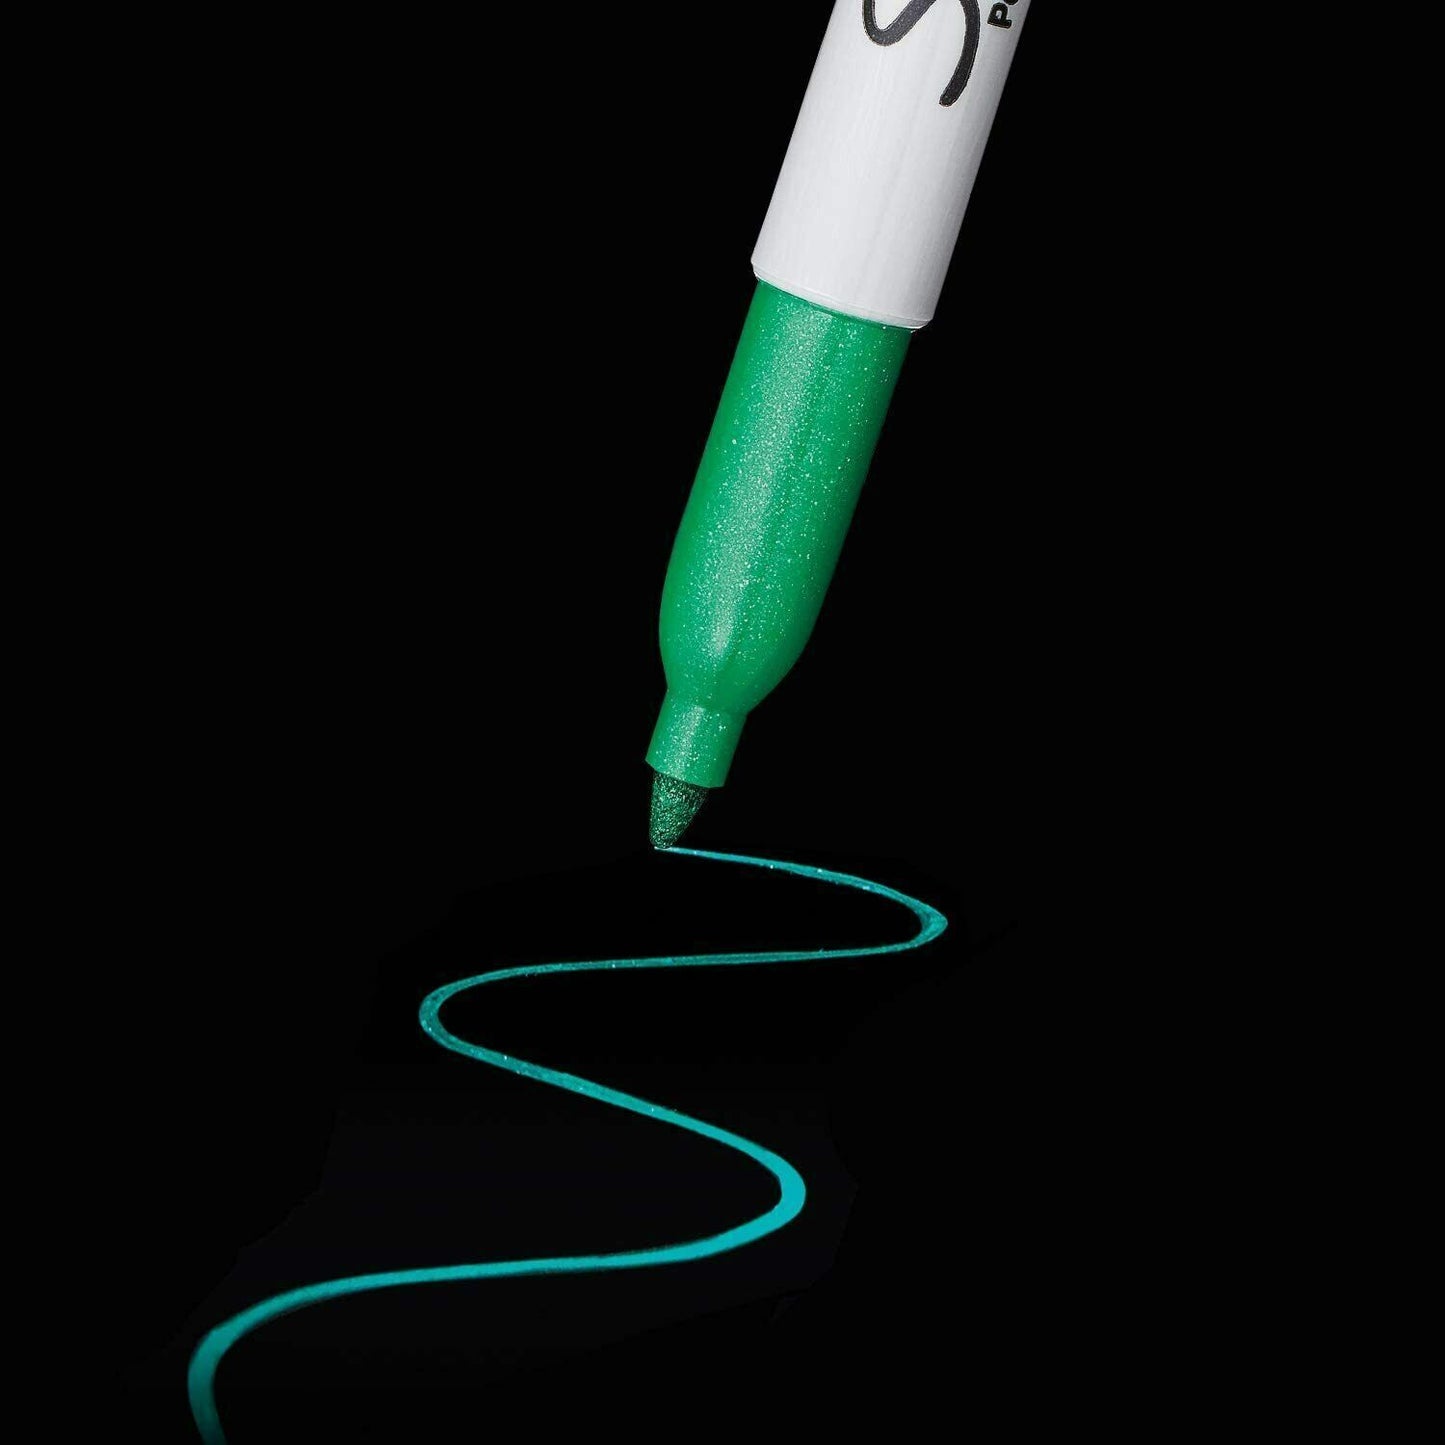 9x Sharpie Metallic Permanent Marker Pens Fine Point (Ruby, Emerald & Sapphire)